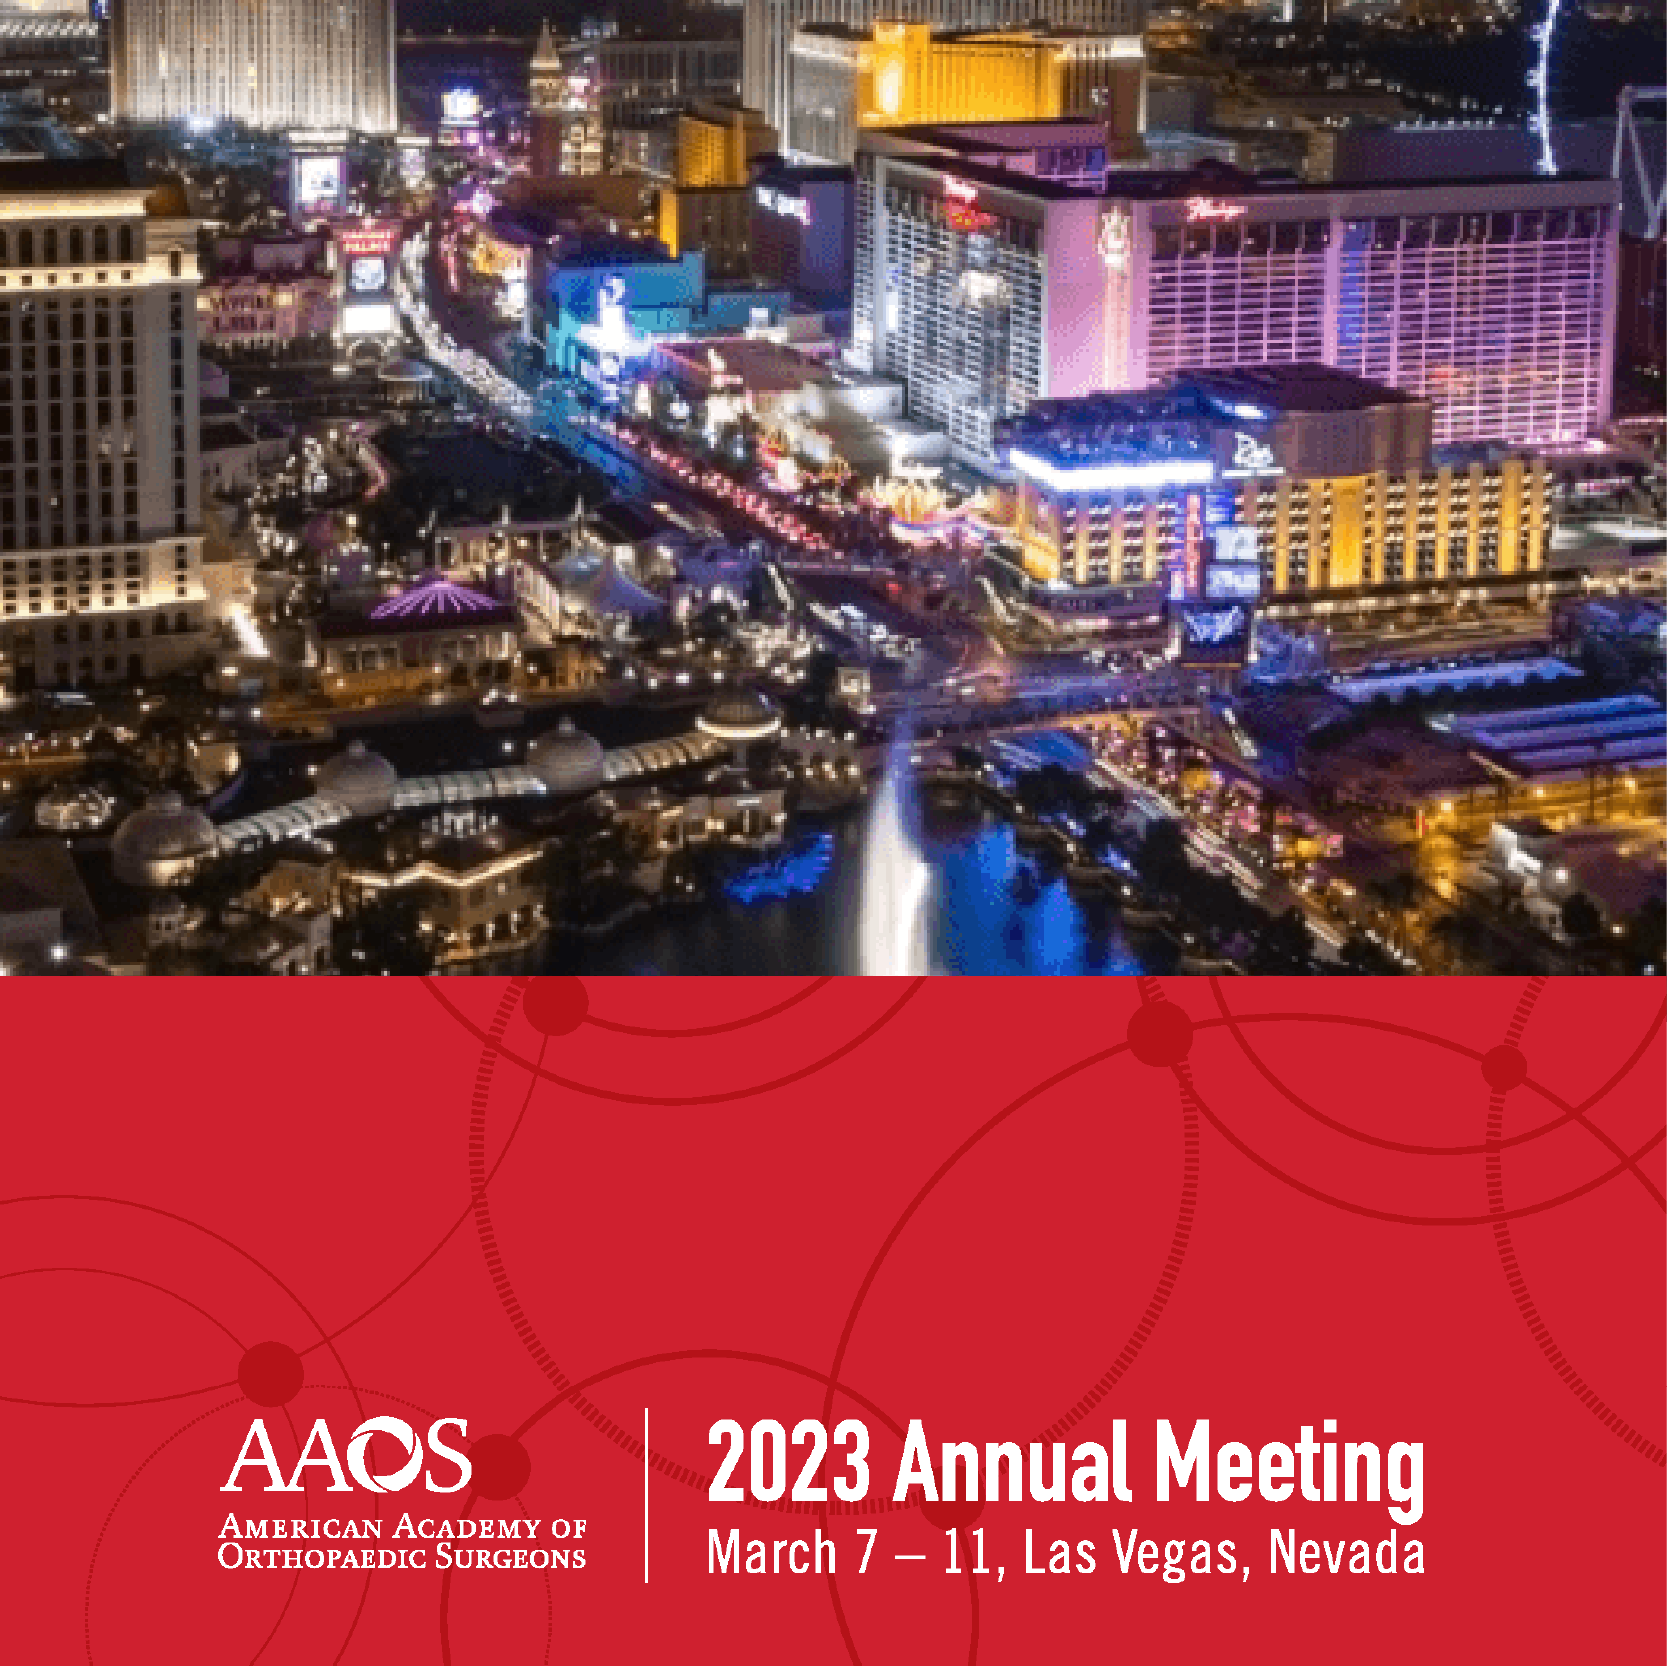 AMERICAN ACADEMY OF ORTHOPAEDIC SURGEONS Annual meeting - AAOS 2023